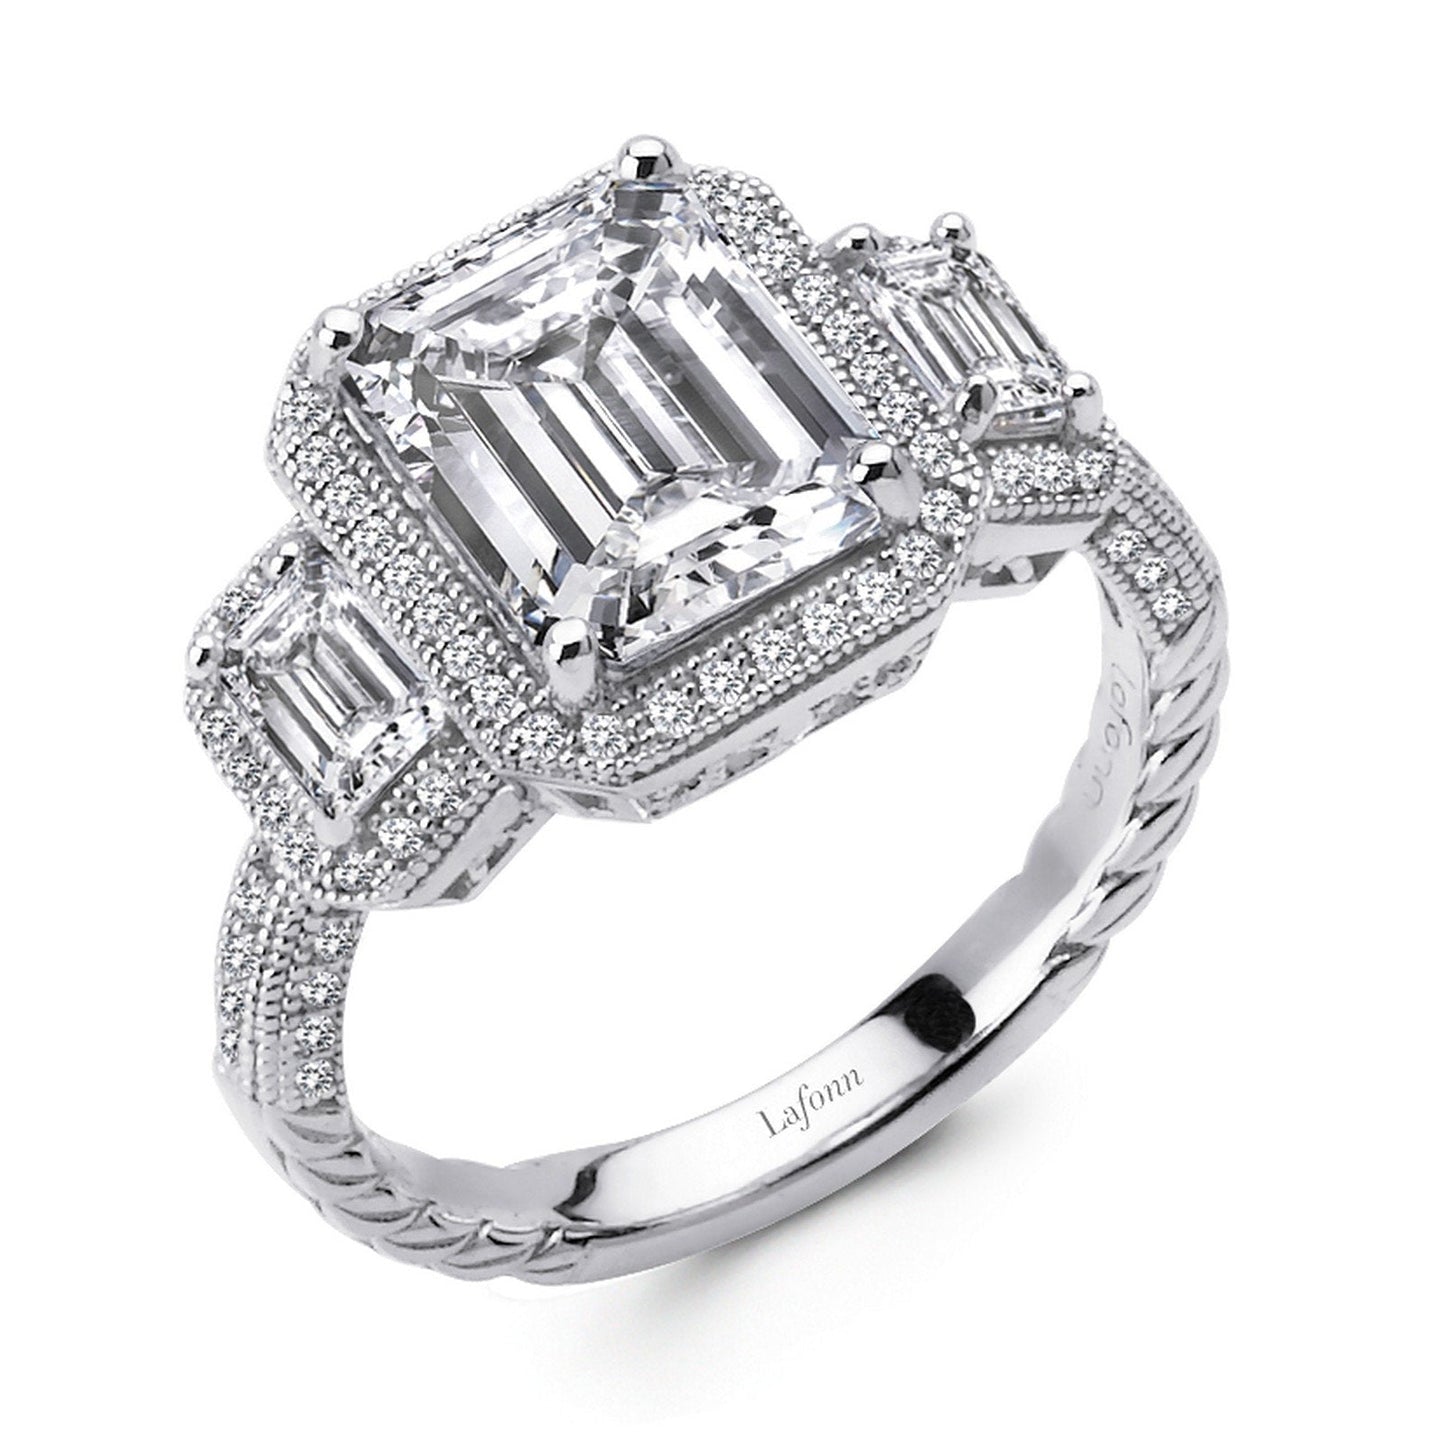 Lafonn Three-Stone Anniversary Ring Simulated Diamond RINGS Size 7 Platinum 4.37 CTS 